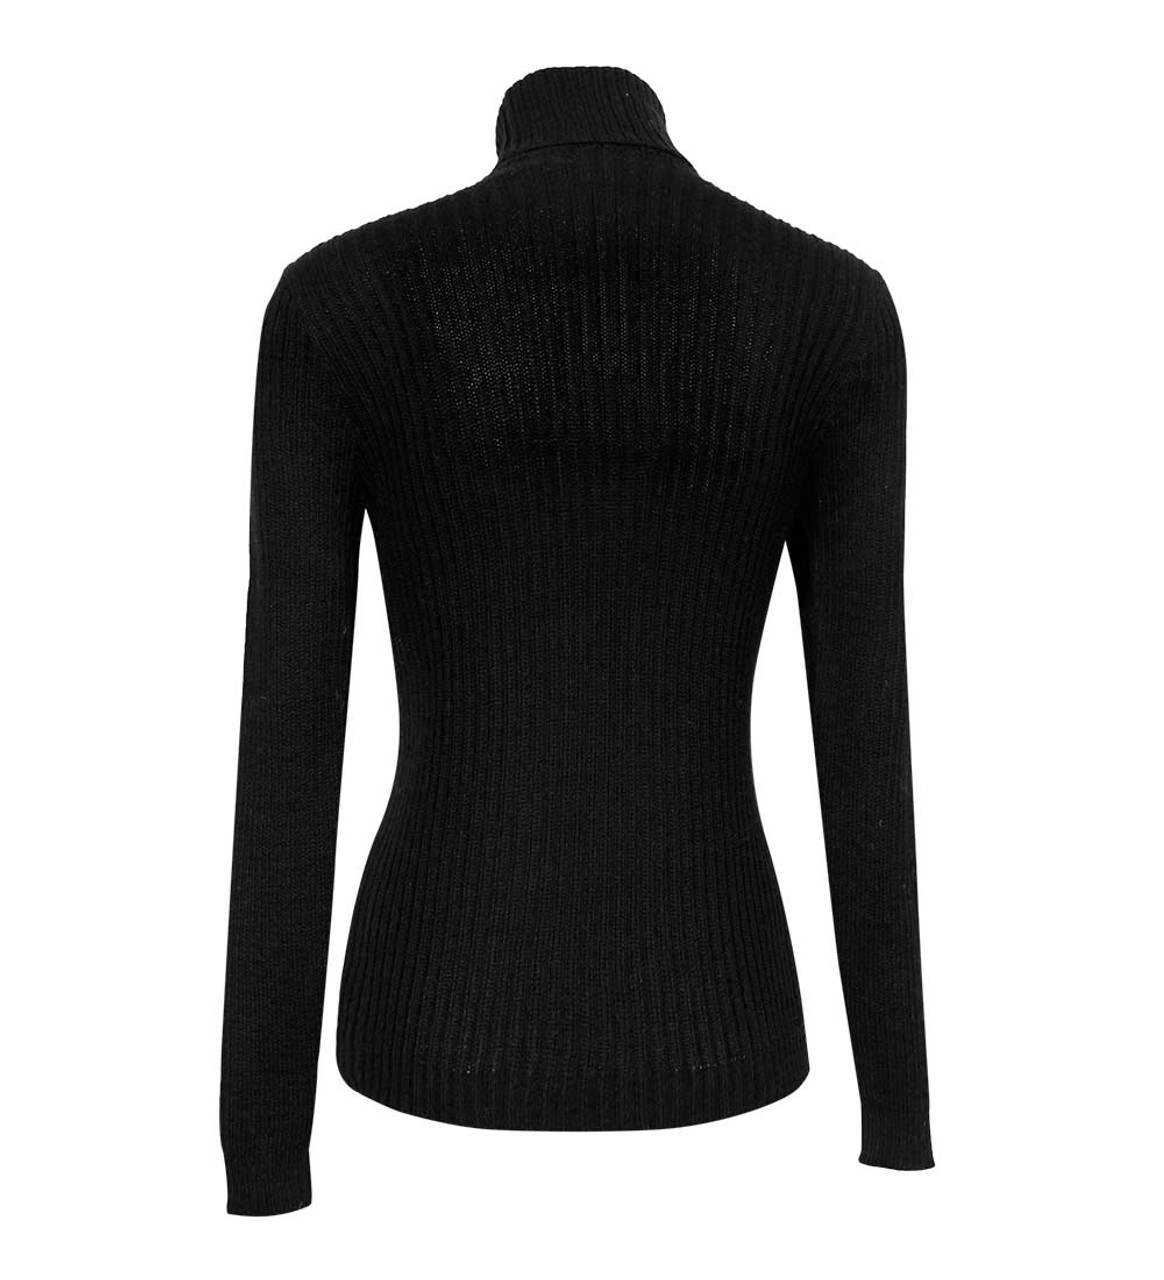 Black Solid Rib-Knit Turtle Neck Sweater - SNITCH